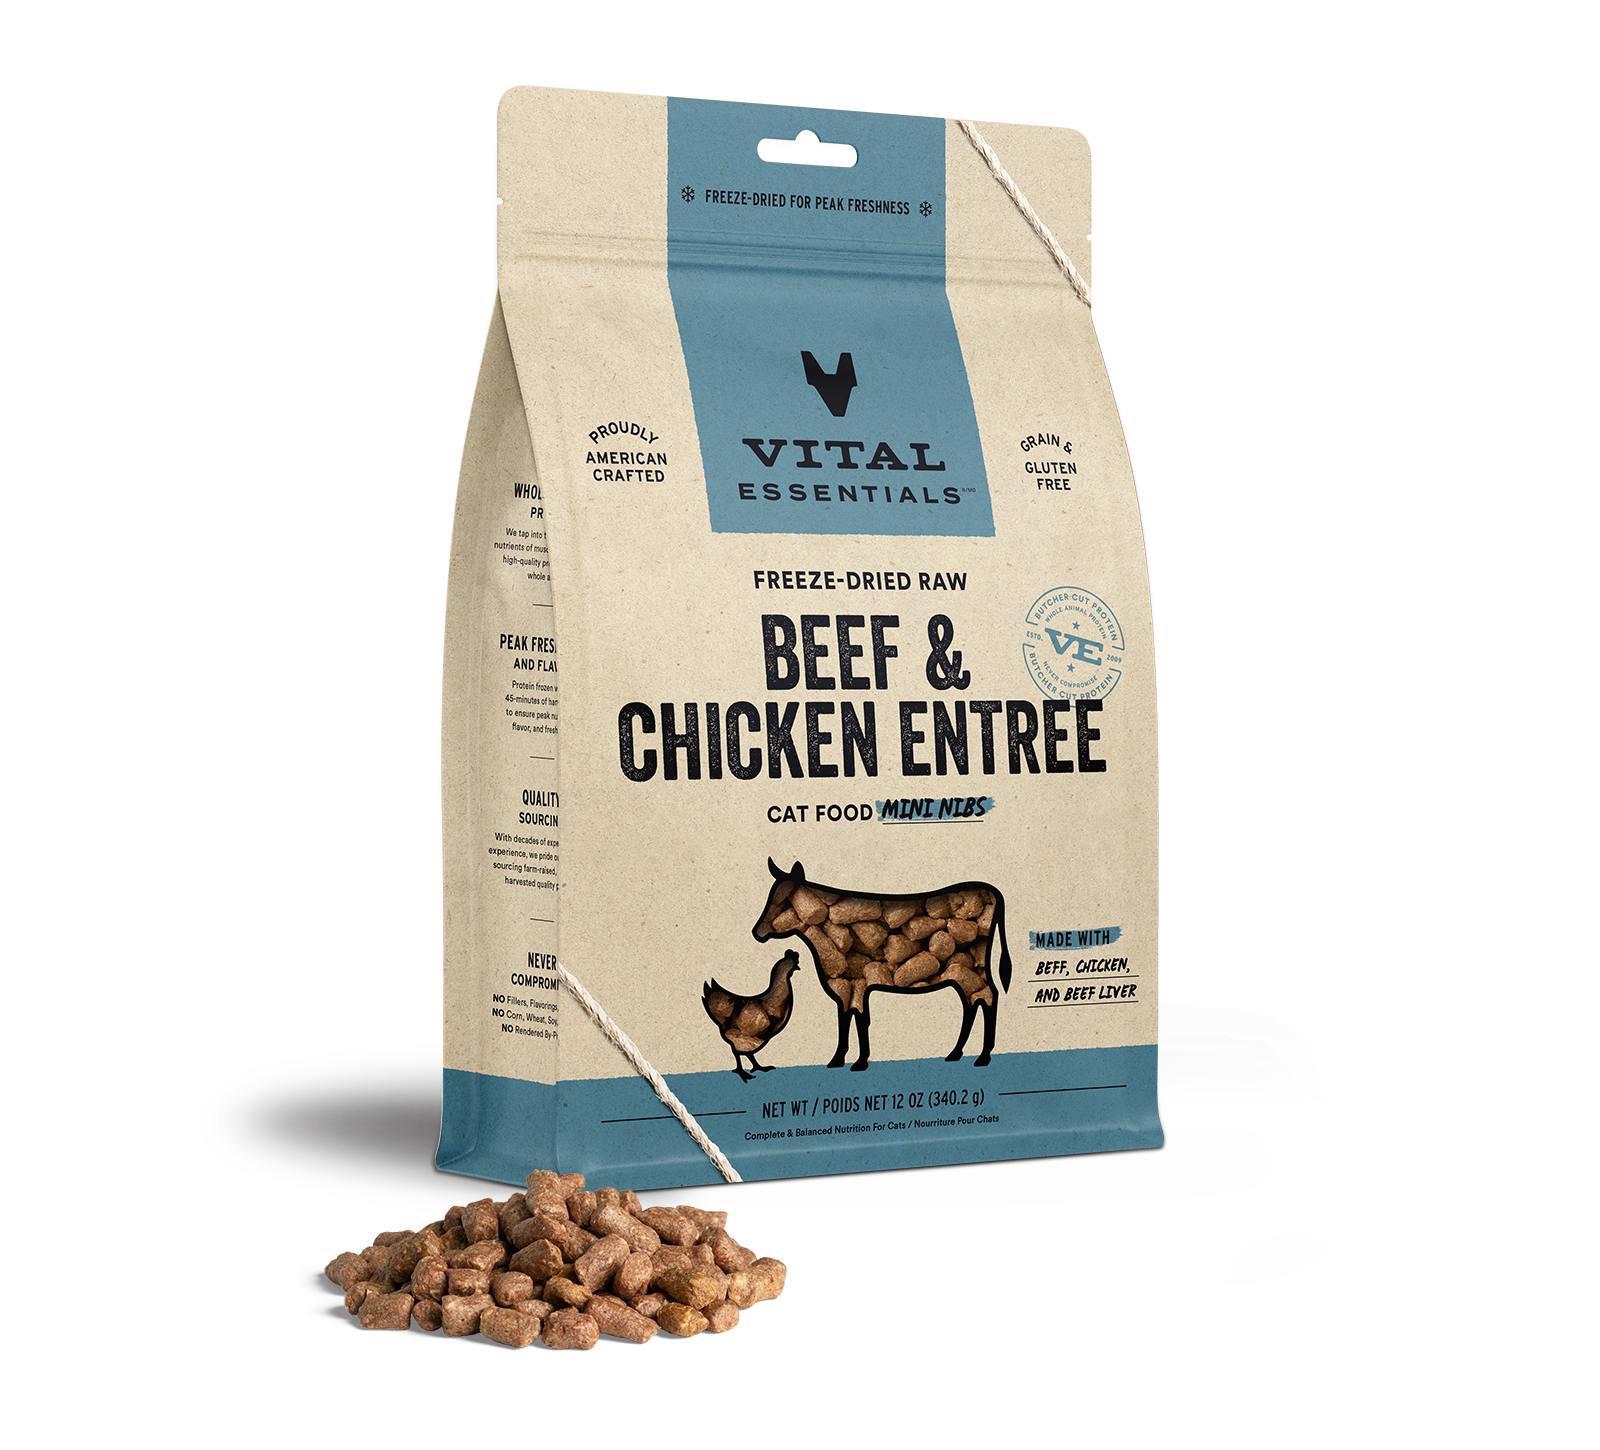 Vital Essentials Freeze-Dried Raw Beef & Chicken Entree Cat Food Mini Nibs, 12 oz - Health/First Aid